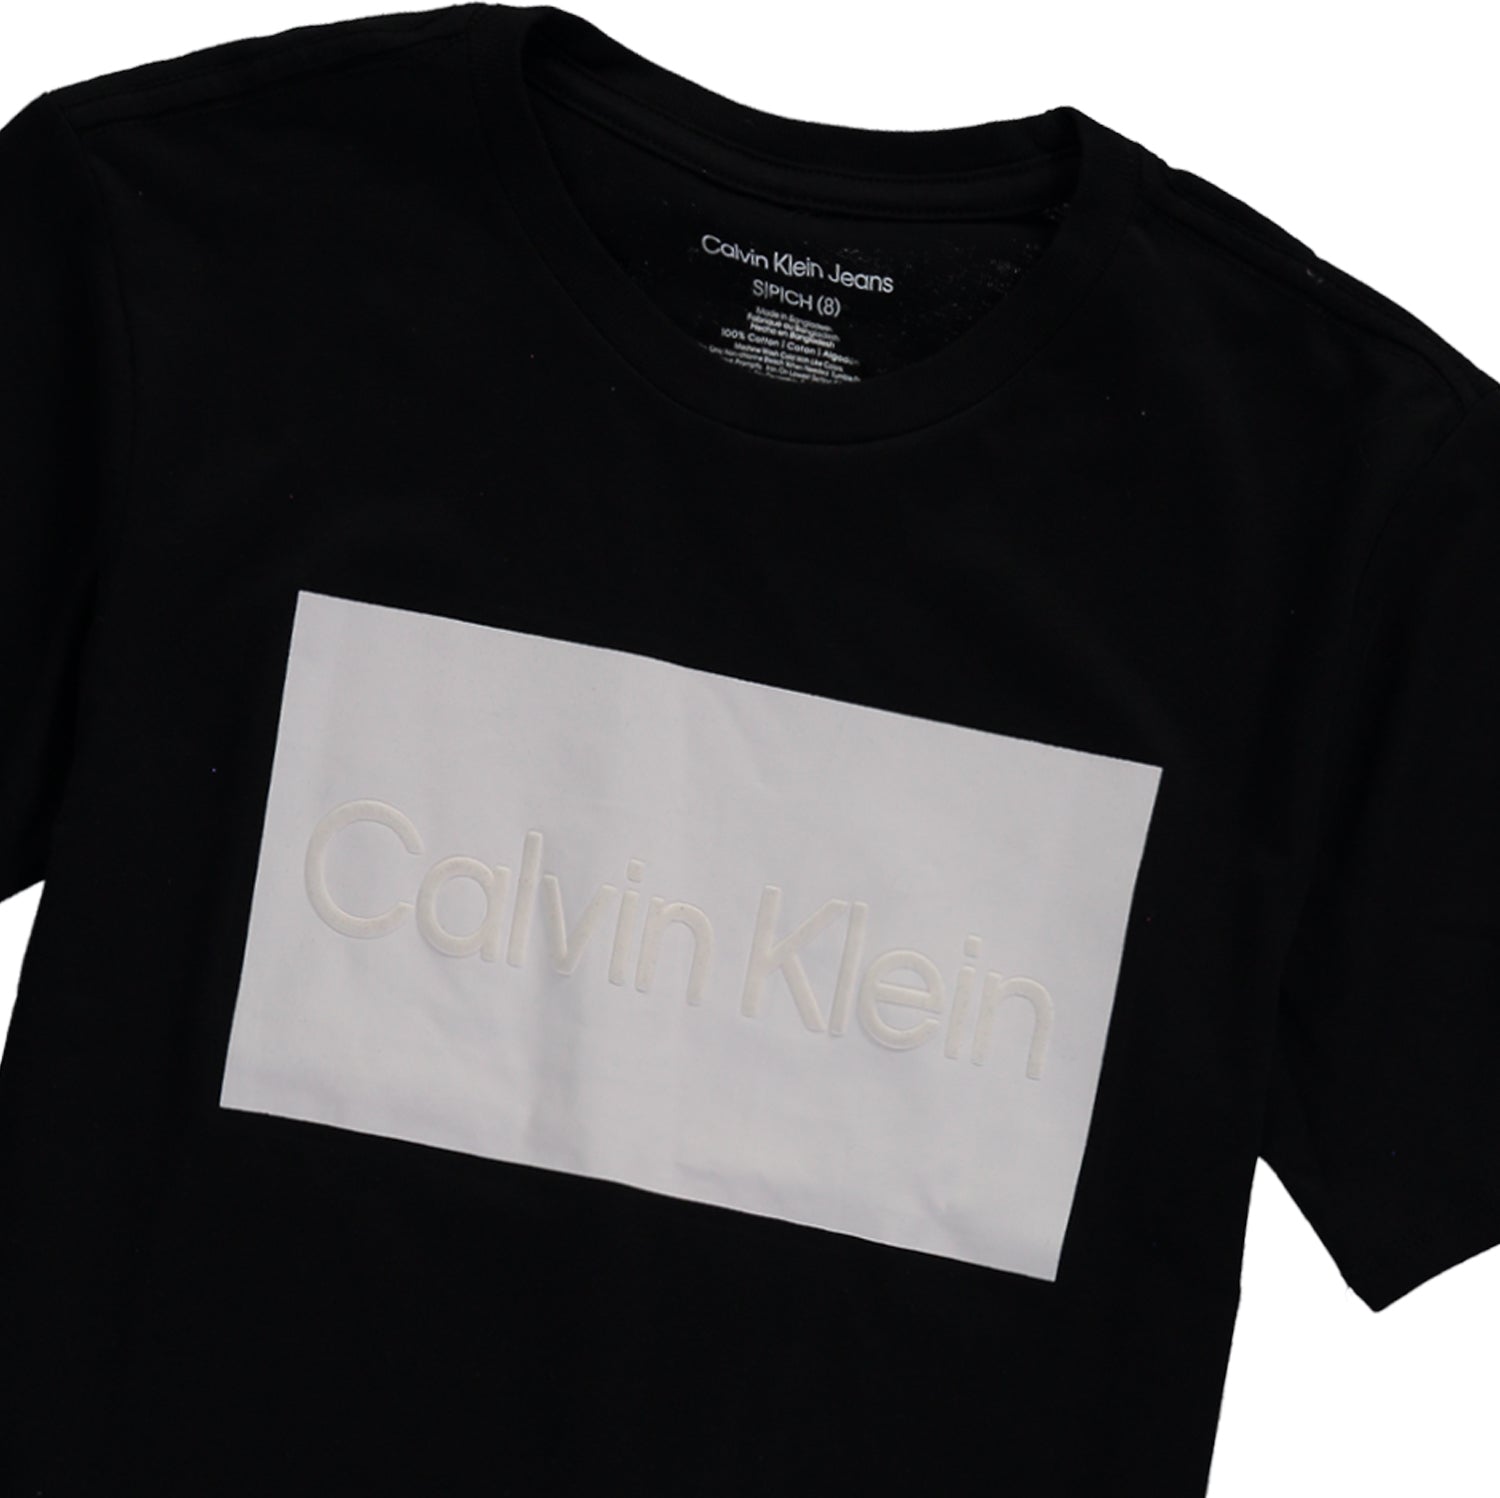 Calvin klein jeans Mixed Monogram Short Sleeve T-Shirt Black